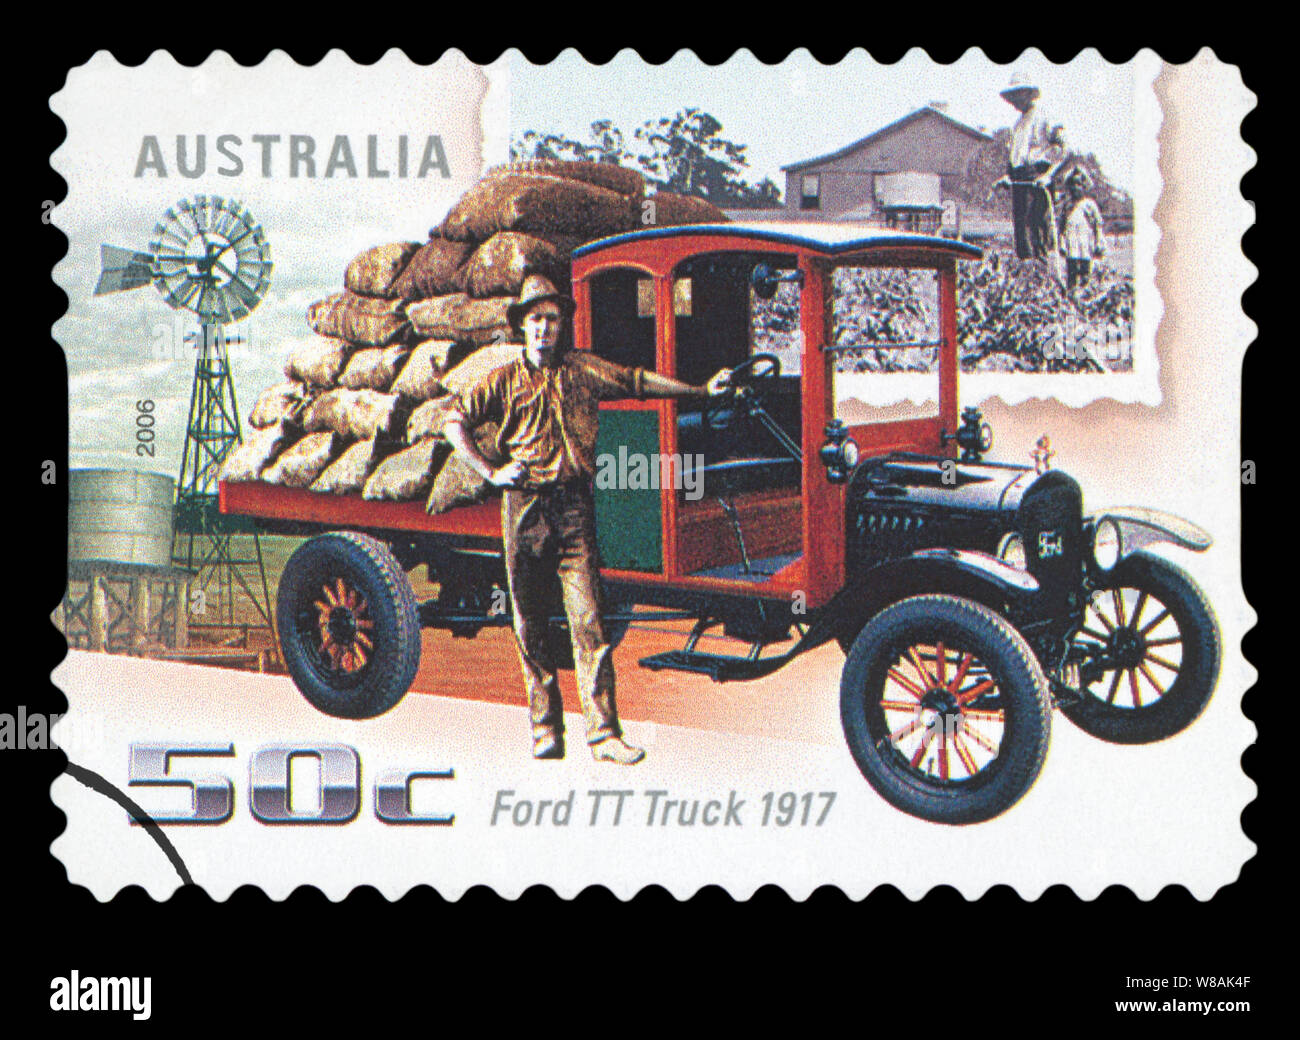 AUSTRALIA - CIRCA 2006: A stamp printed in Australia shows image of a 1917 Ford TT truck, series, circa 2006 Stock Photo